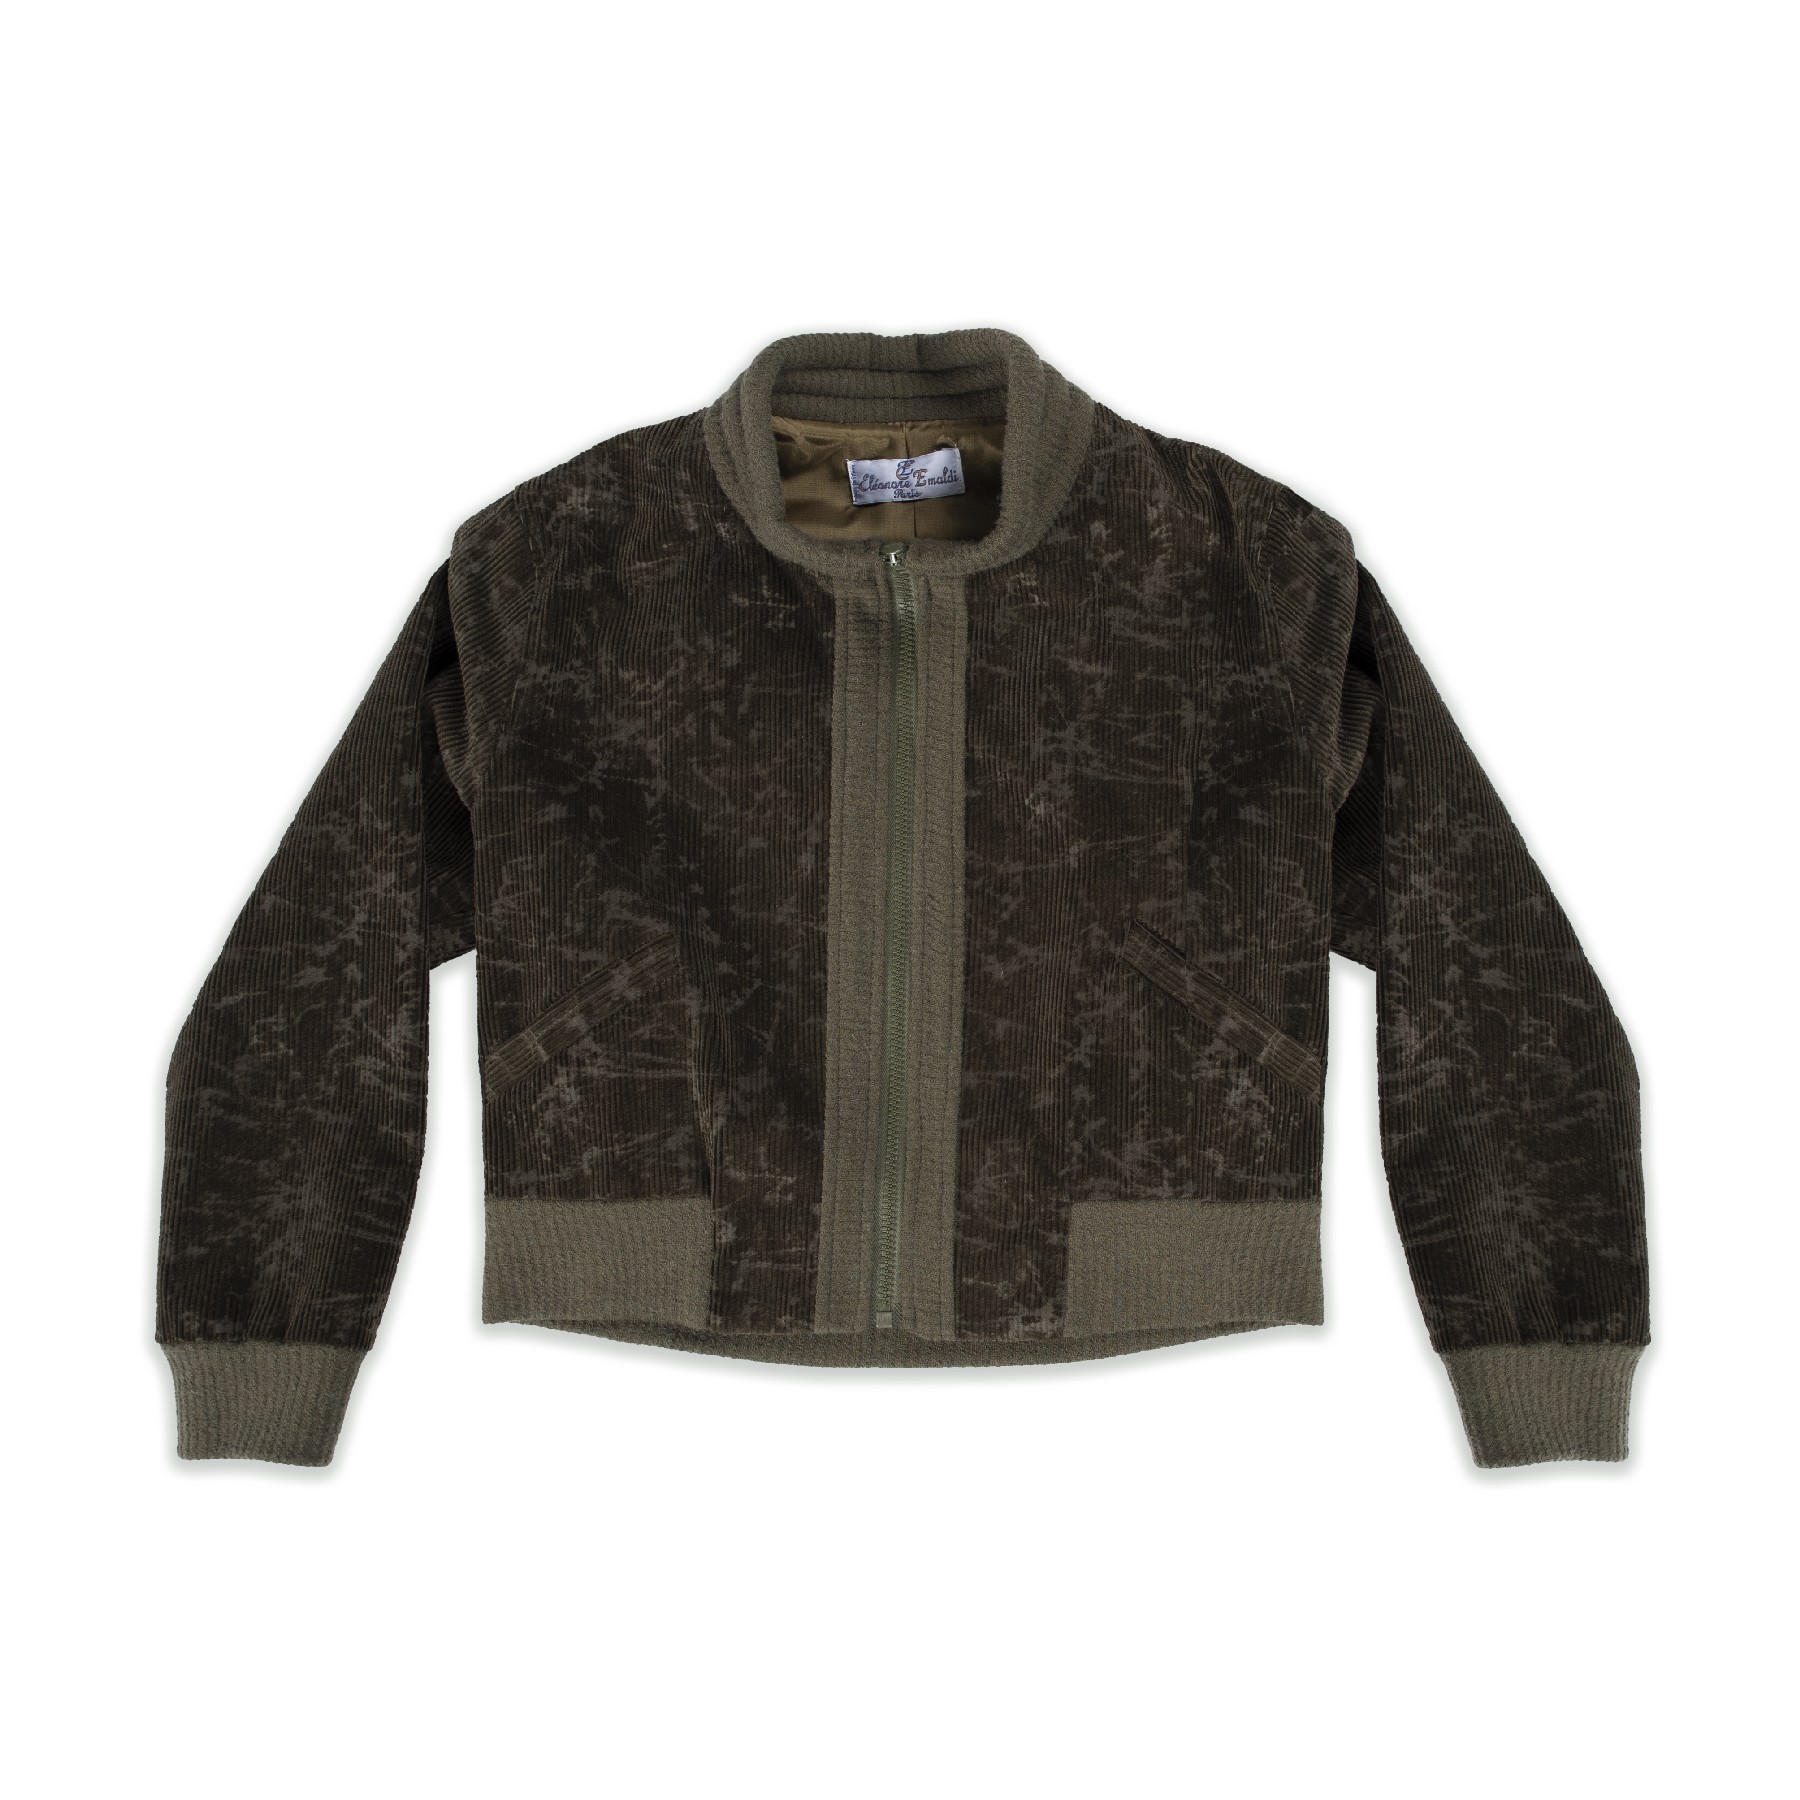 Khaki burnt velvet jacket with matching wool jersey